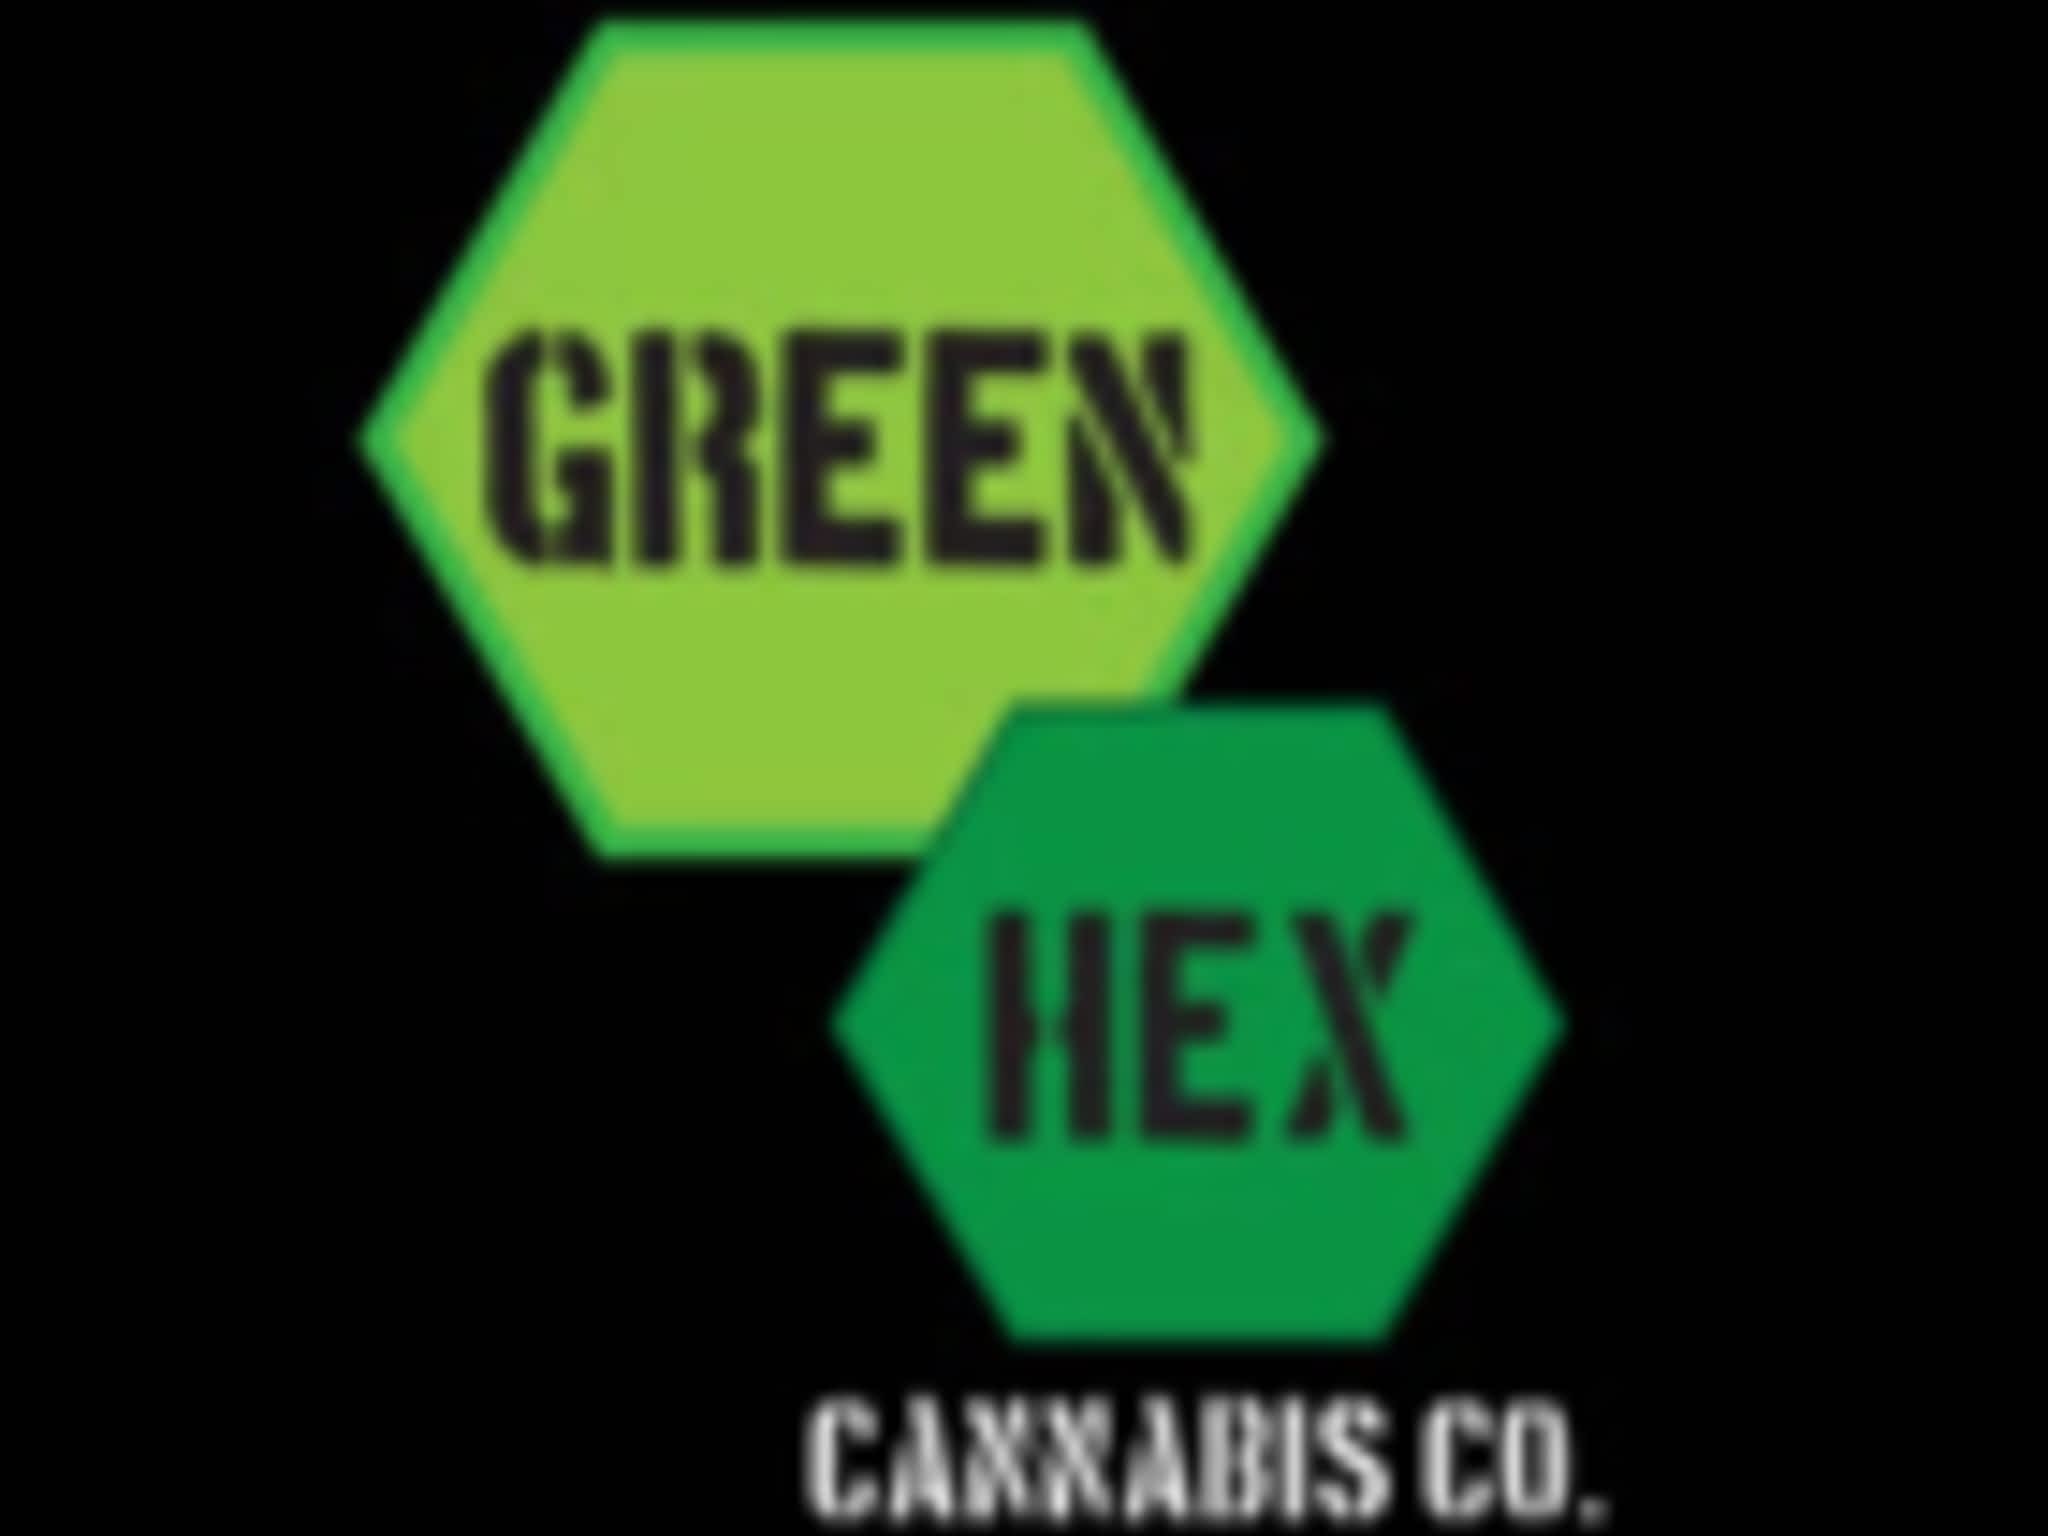 photo The Green Hex Cannabis Co.